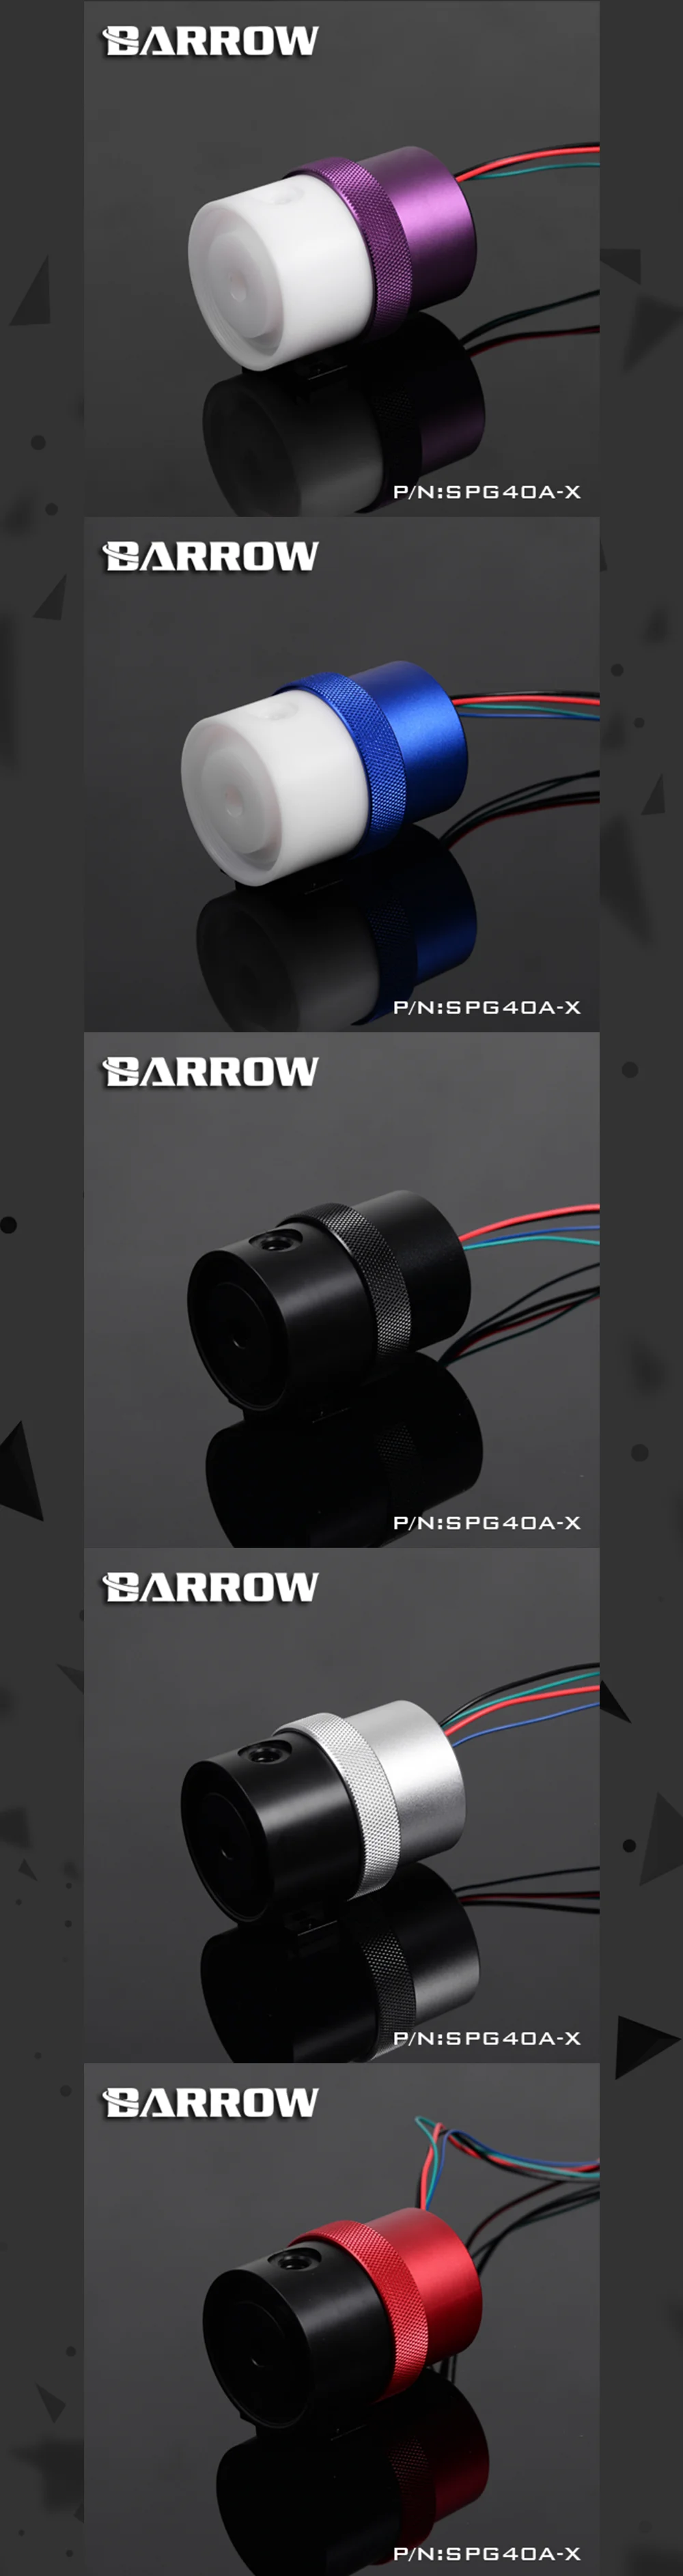 Barrow SPG40A-X, 18W PWM Pumps, Maximum Flow 1260L/H, Compatible with D5 Series Pump Cores and Components  